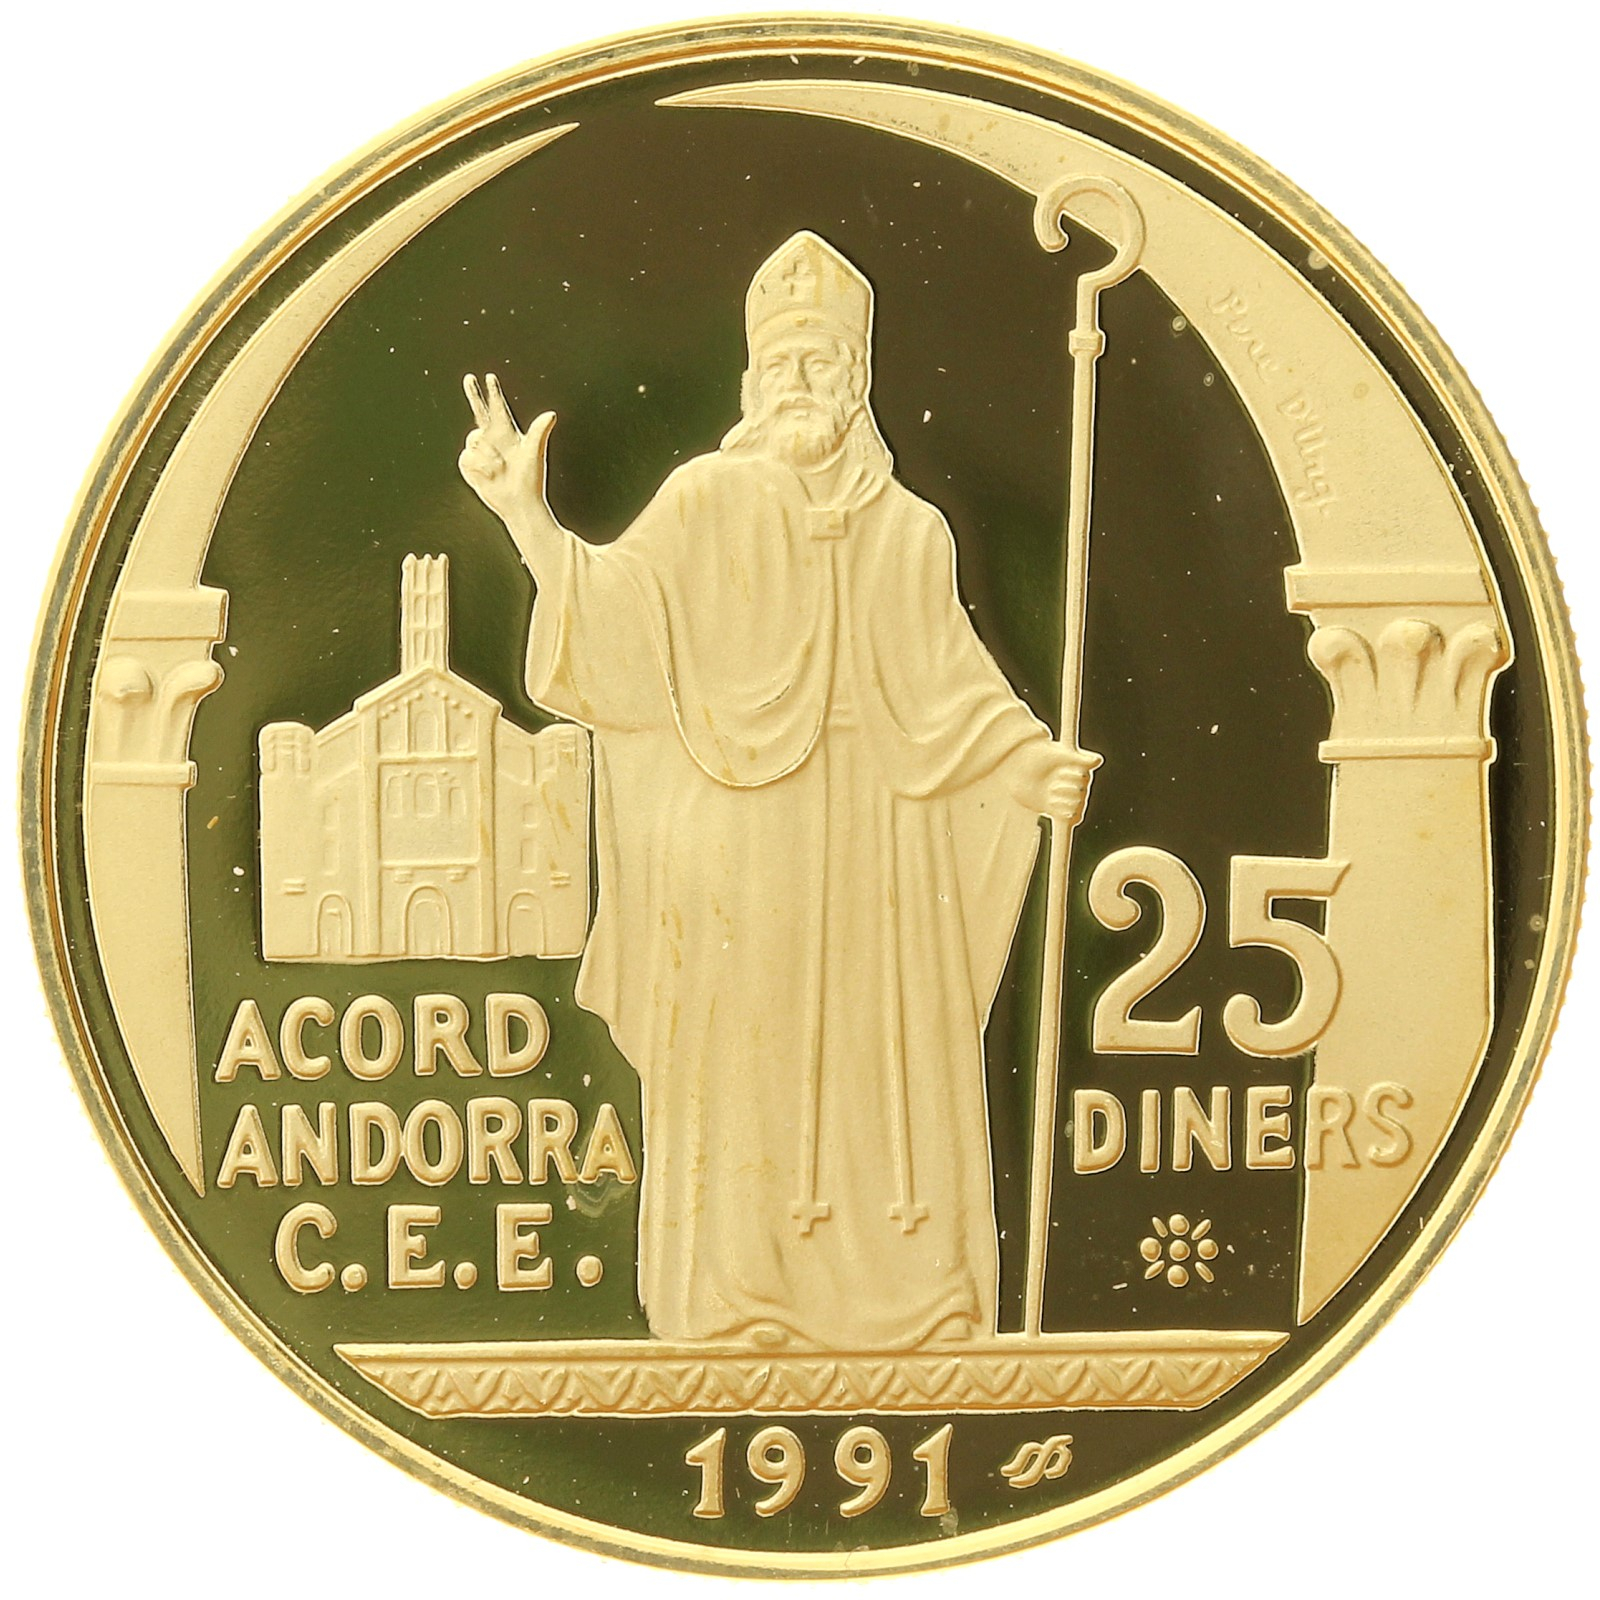 Andorra - 25 Diners - 1994 - Bishop Pere D'Urg standing